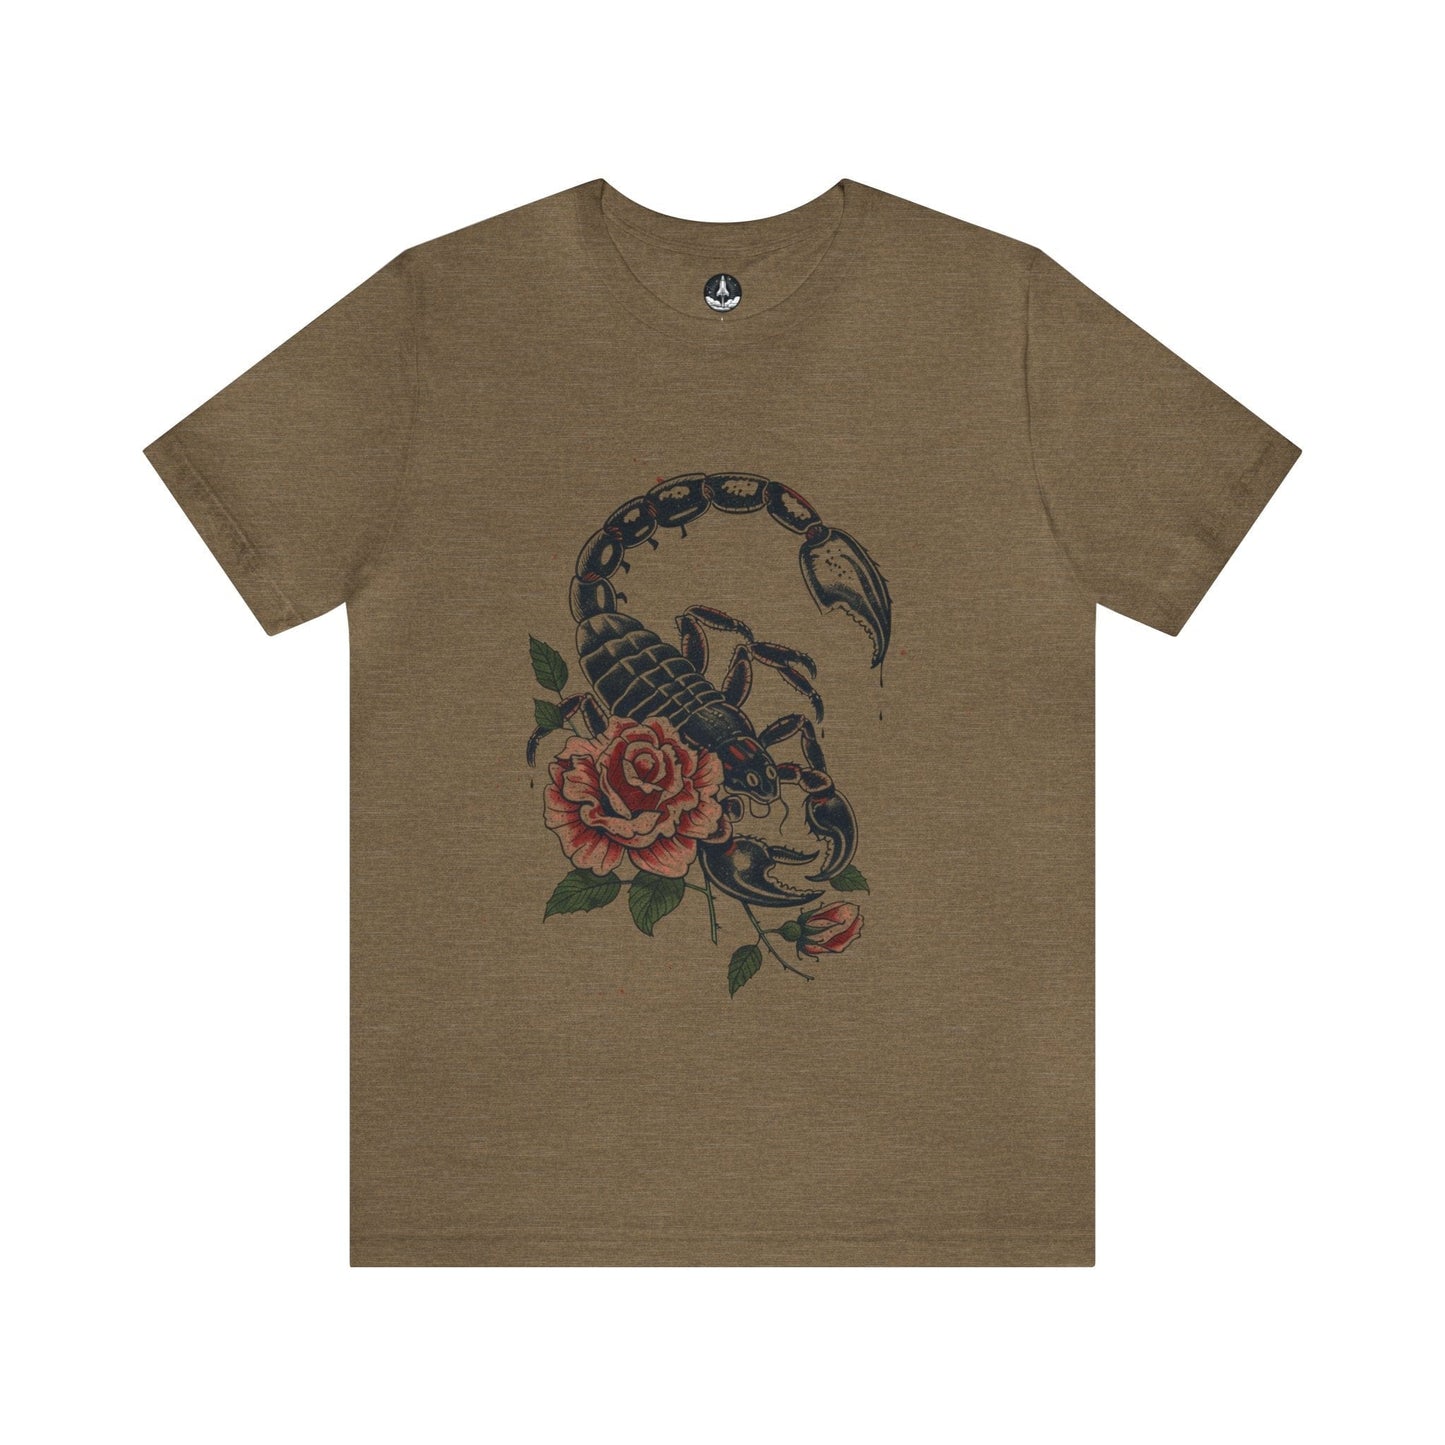 T-Shirt Heather Olive / S Scorpio's Essence TShirt: Mystical Scorpion Art on Soft Cotton